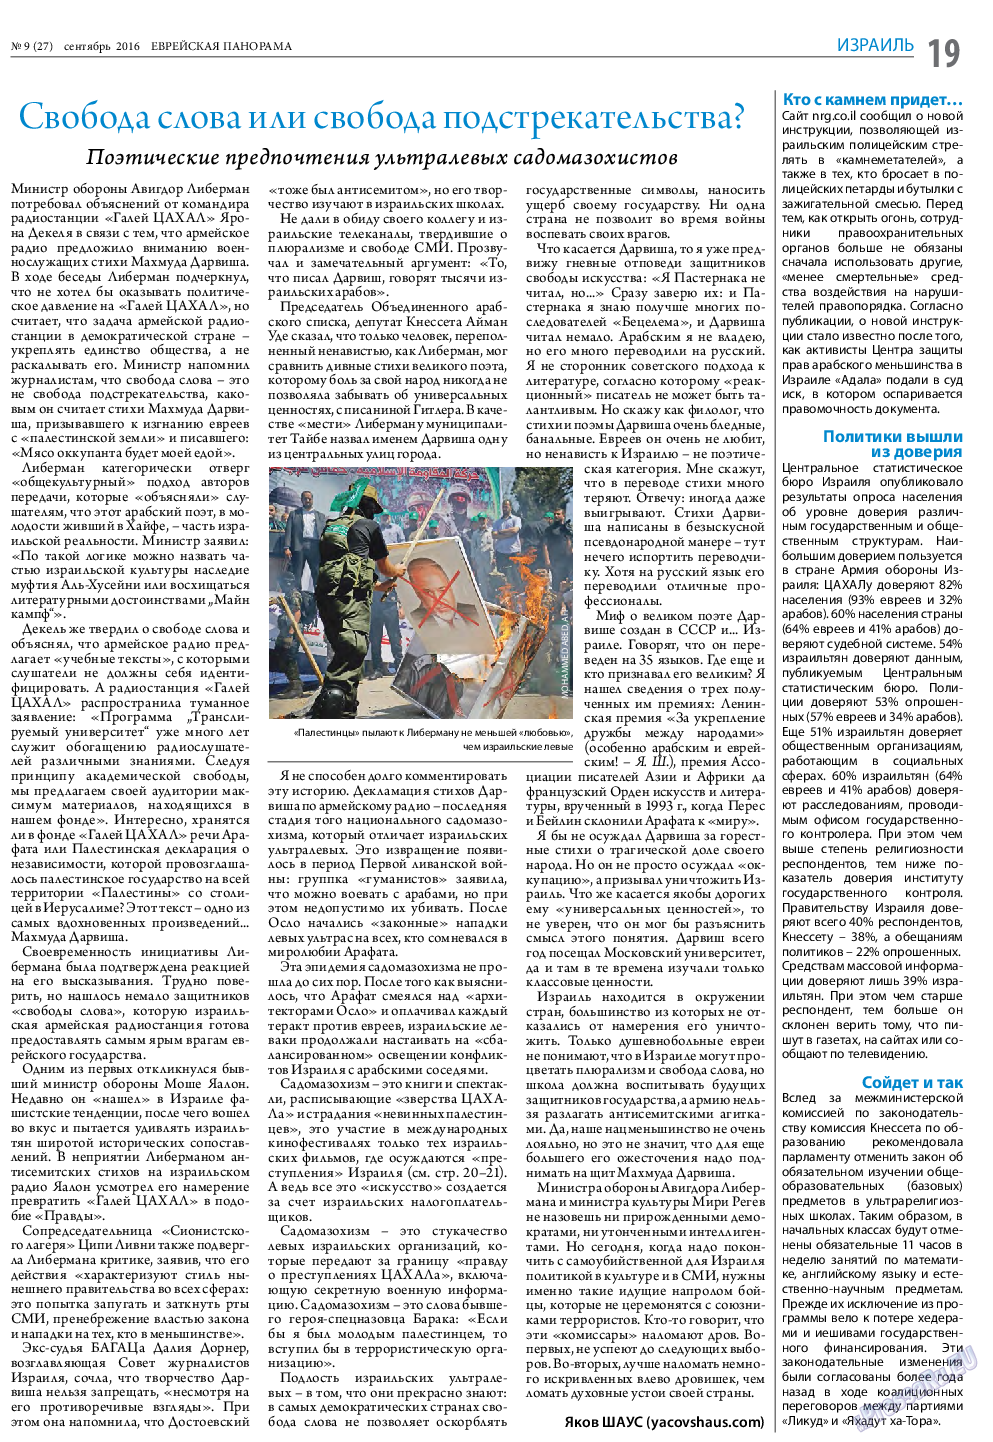 Еврейская панорама, газета. 2016 №9 стр.19